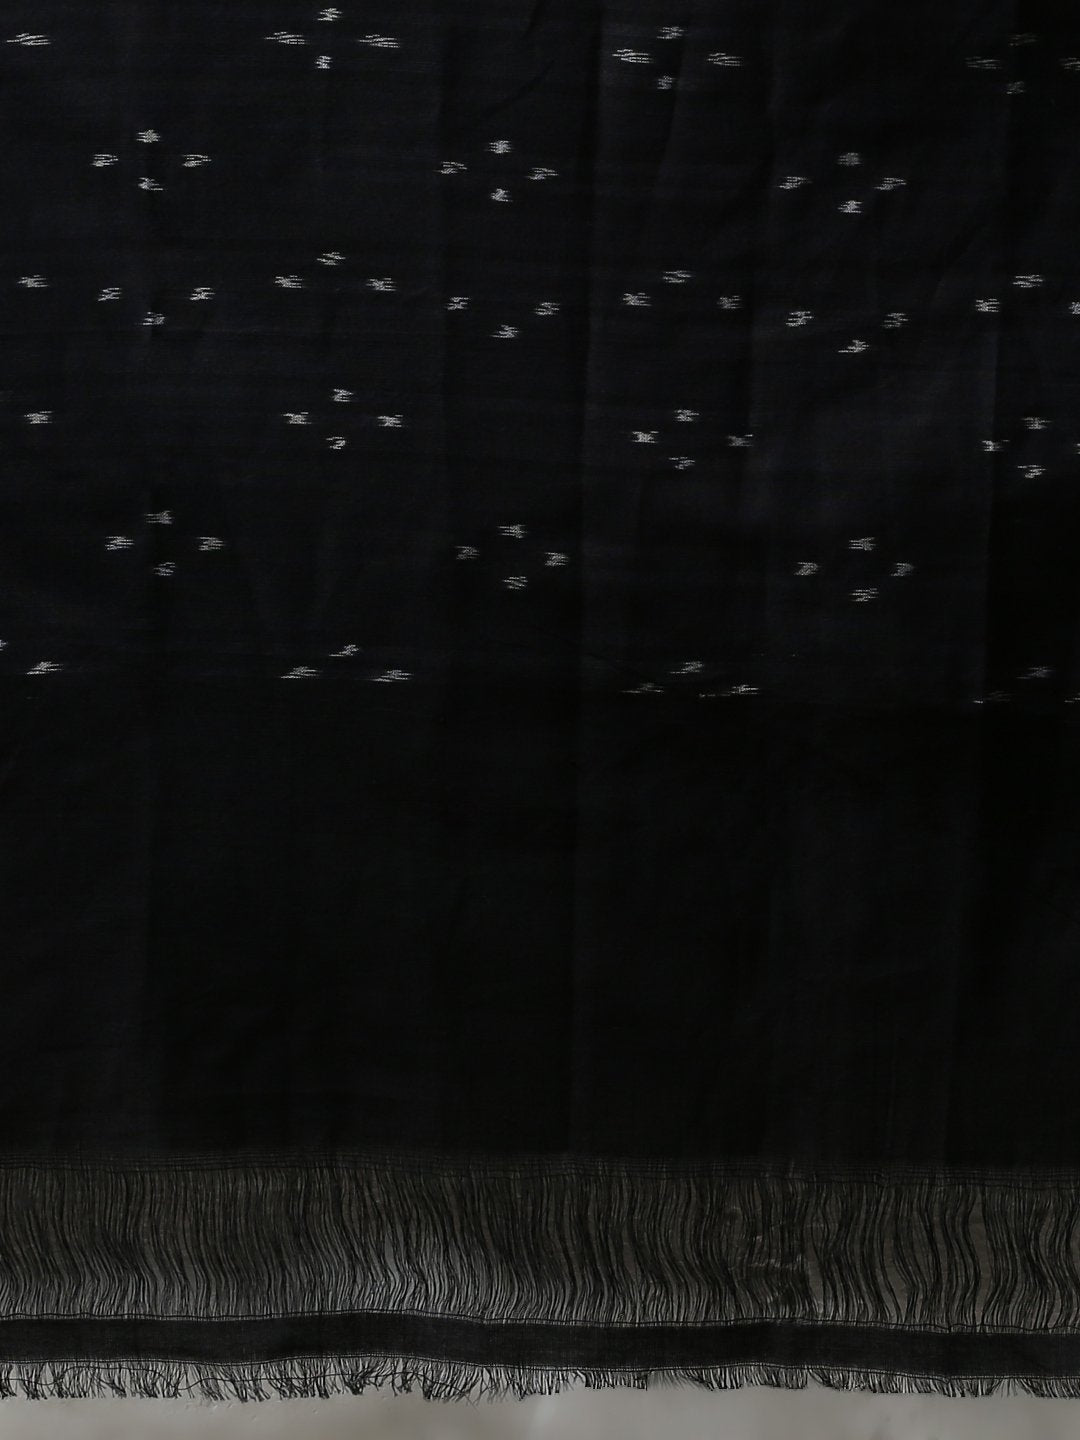 Blue black ikat handloom cotton pochampally saree